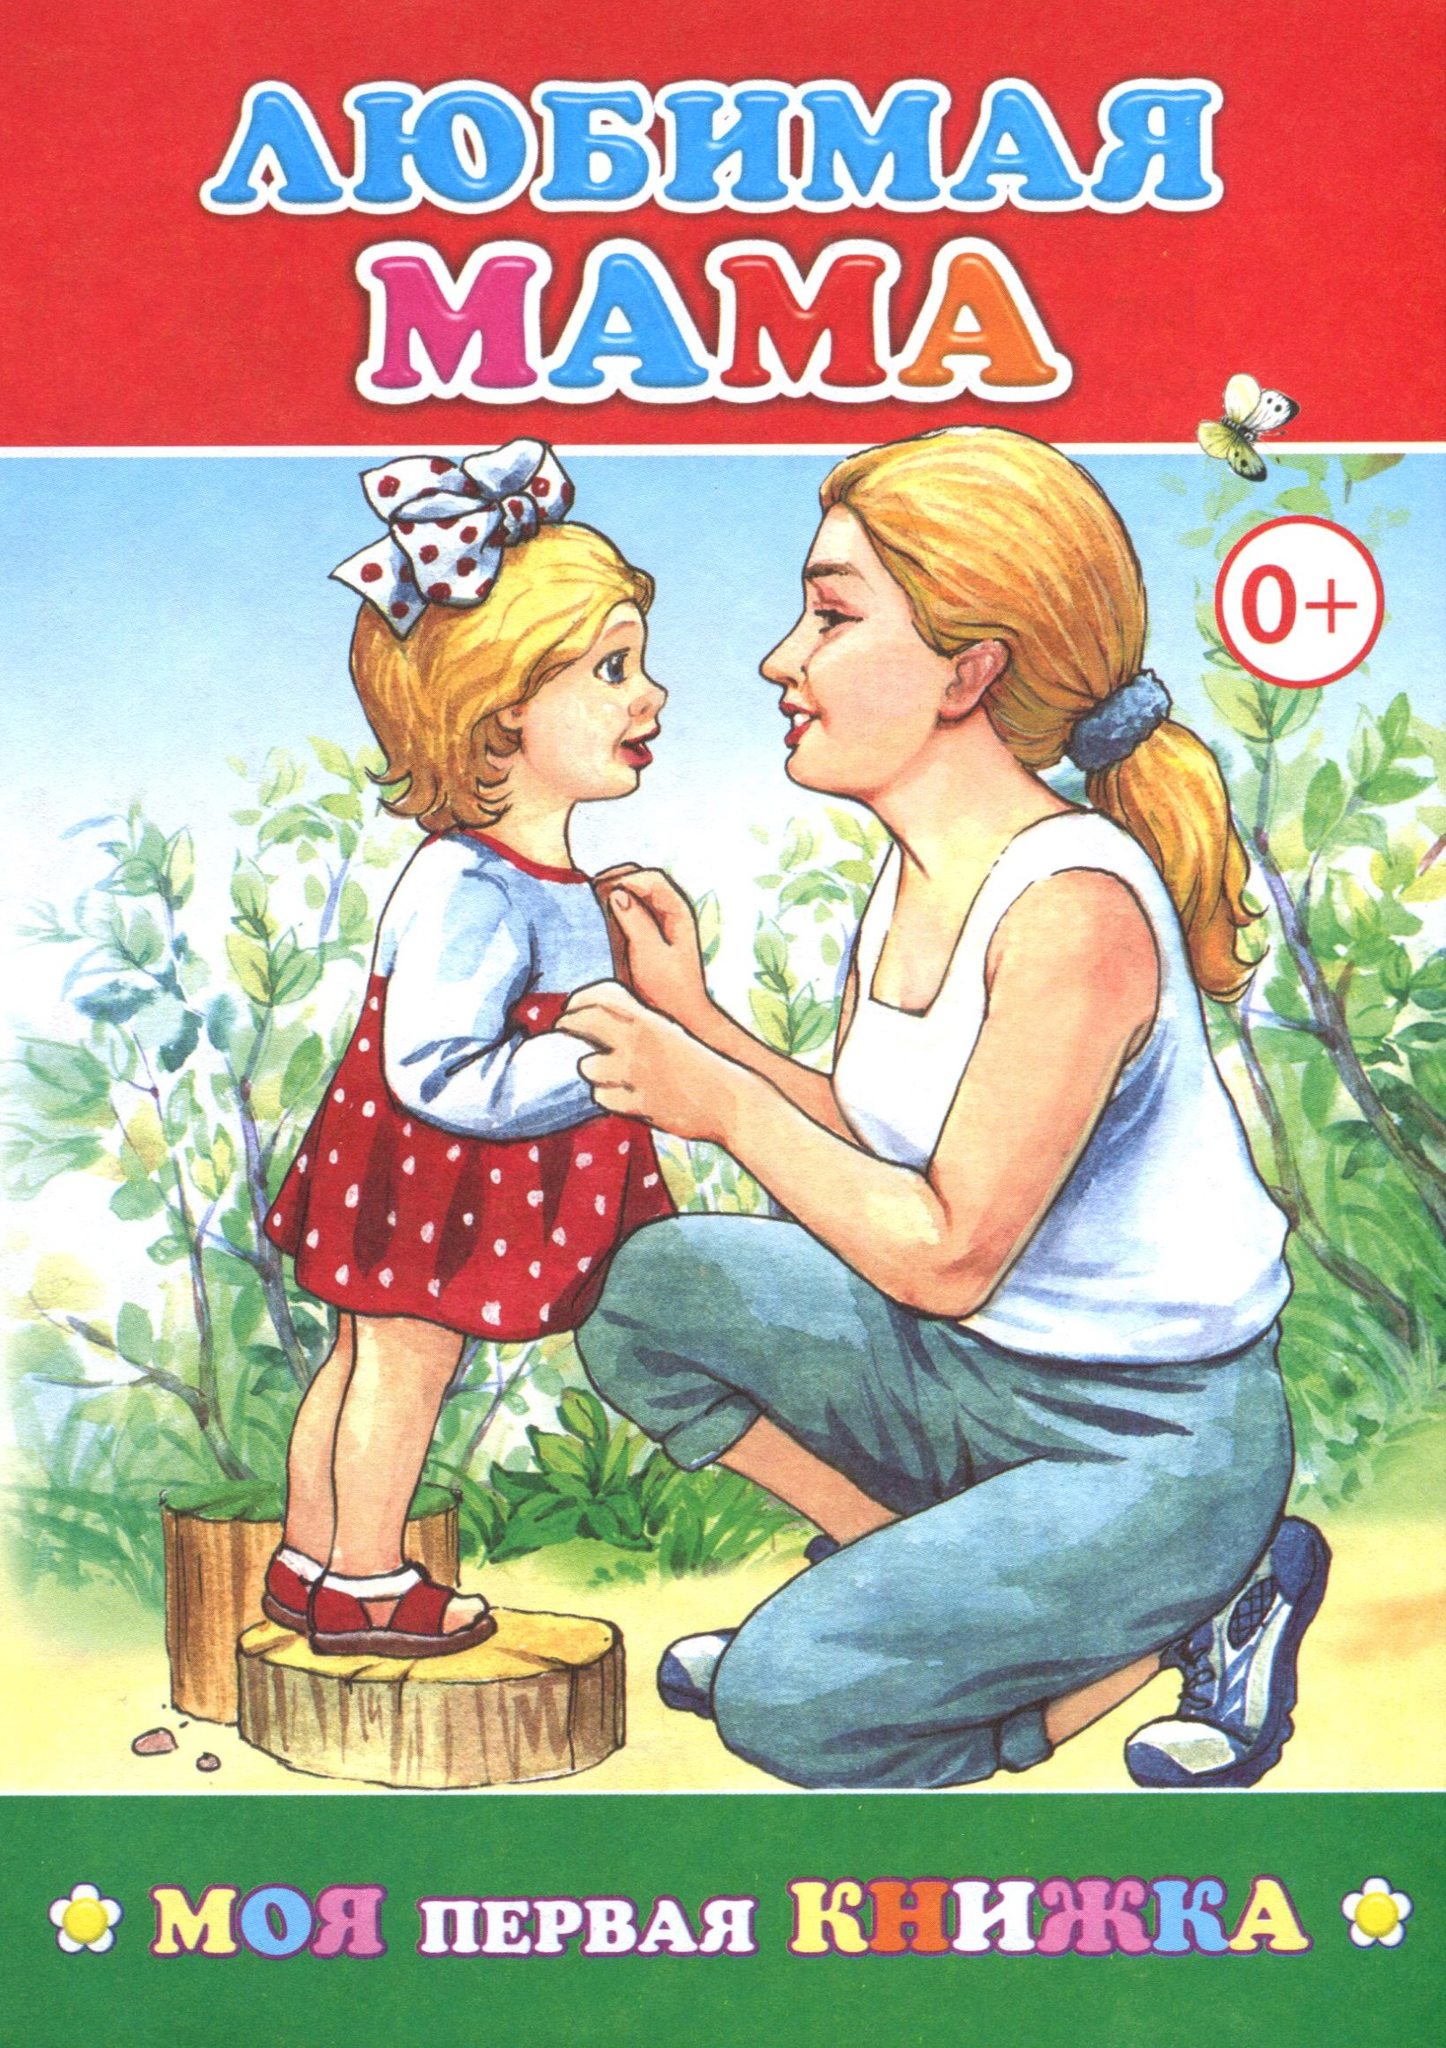 Новинка про маму. Книги о маме. Книги о маме для детей. Детские книжки про маму. Детские книги о маме.